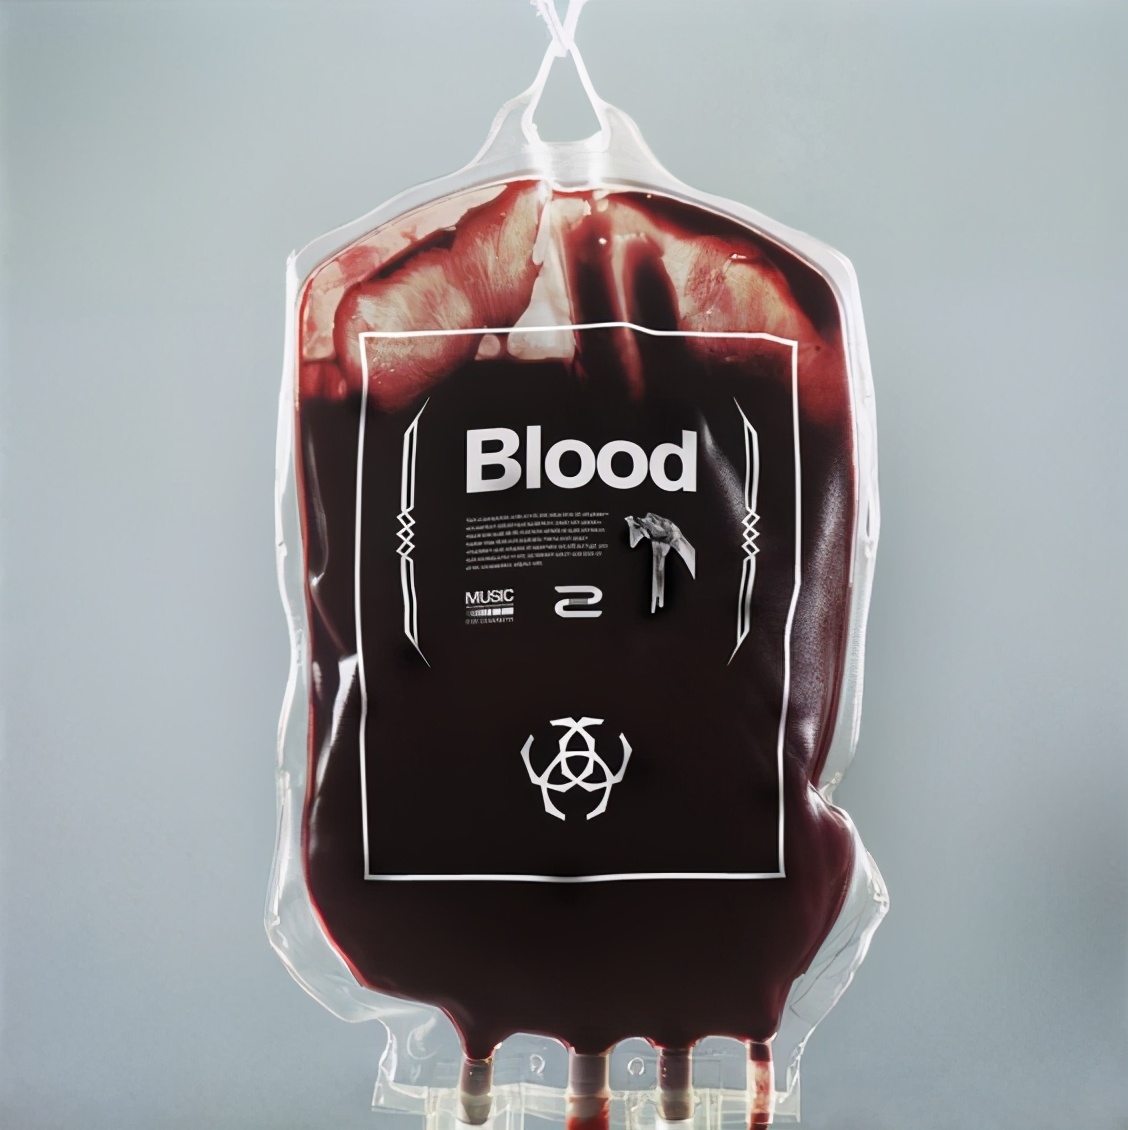 a3亚型血有多少人（a3亚型血可以救所有人吗?）